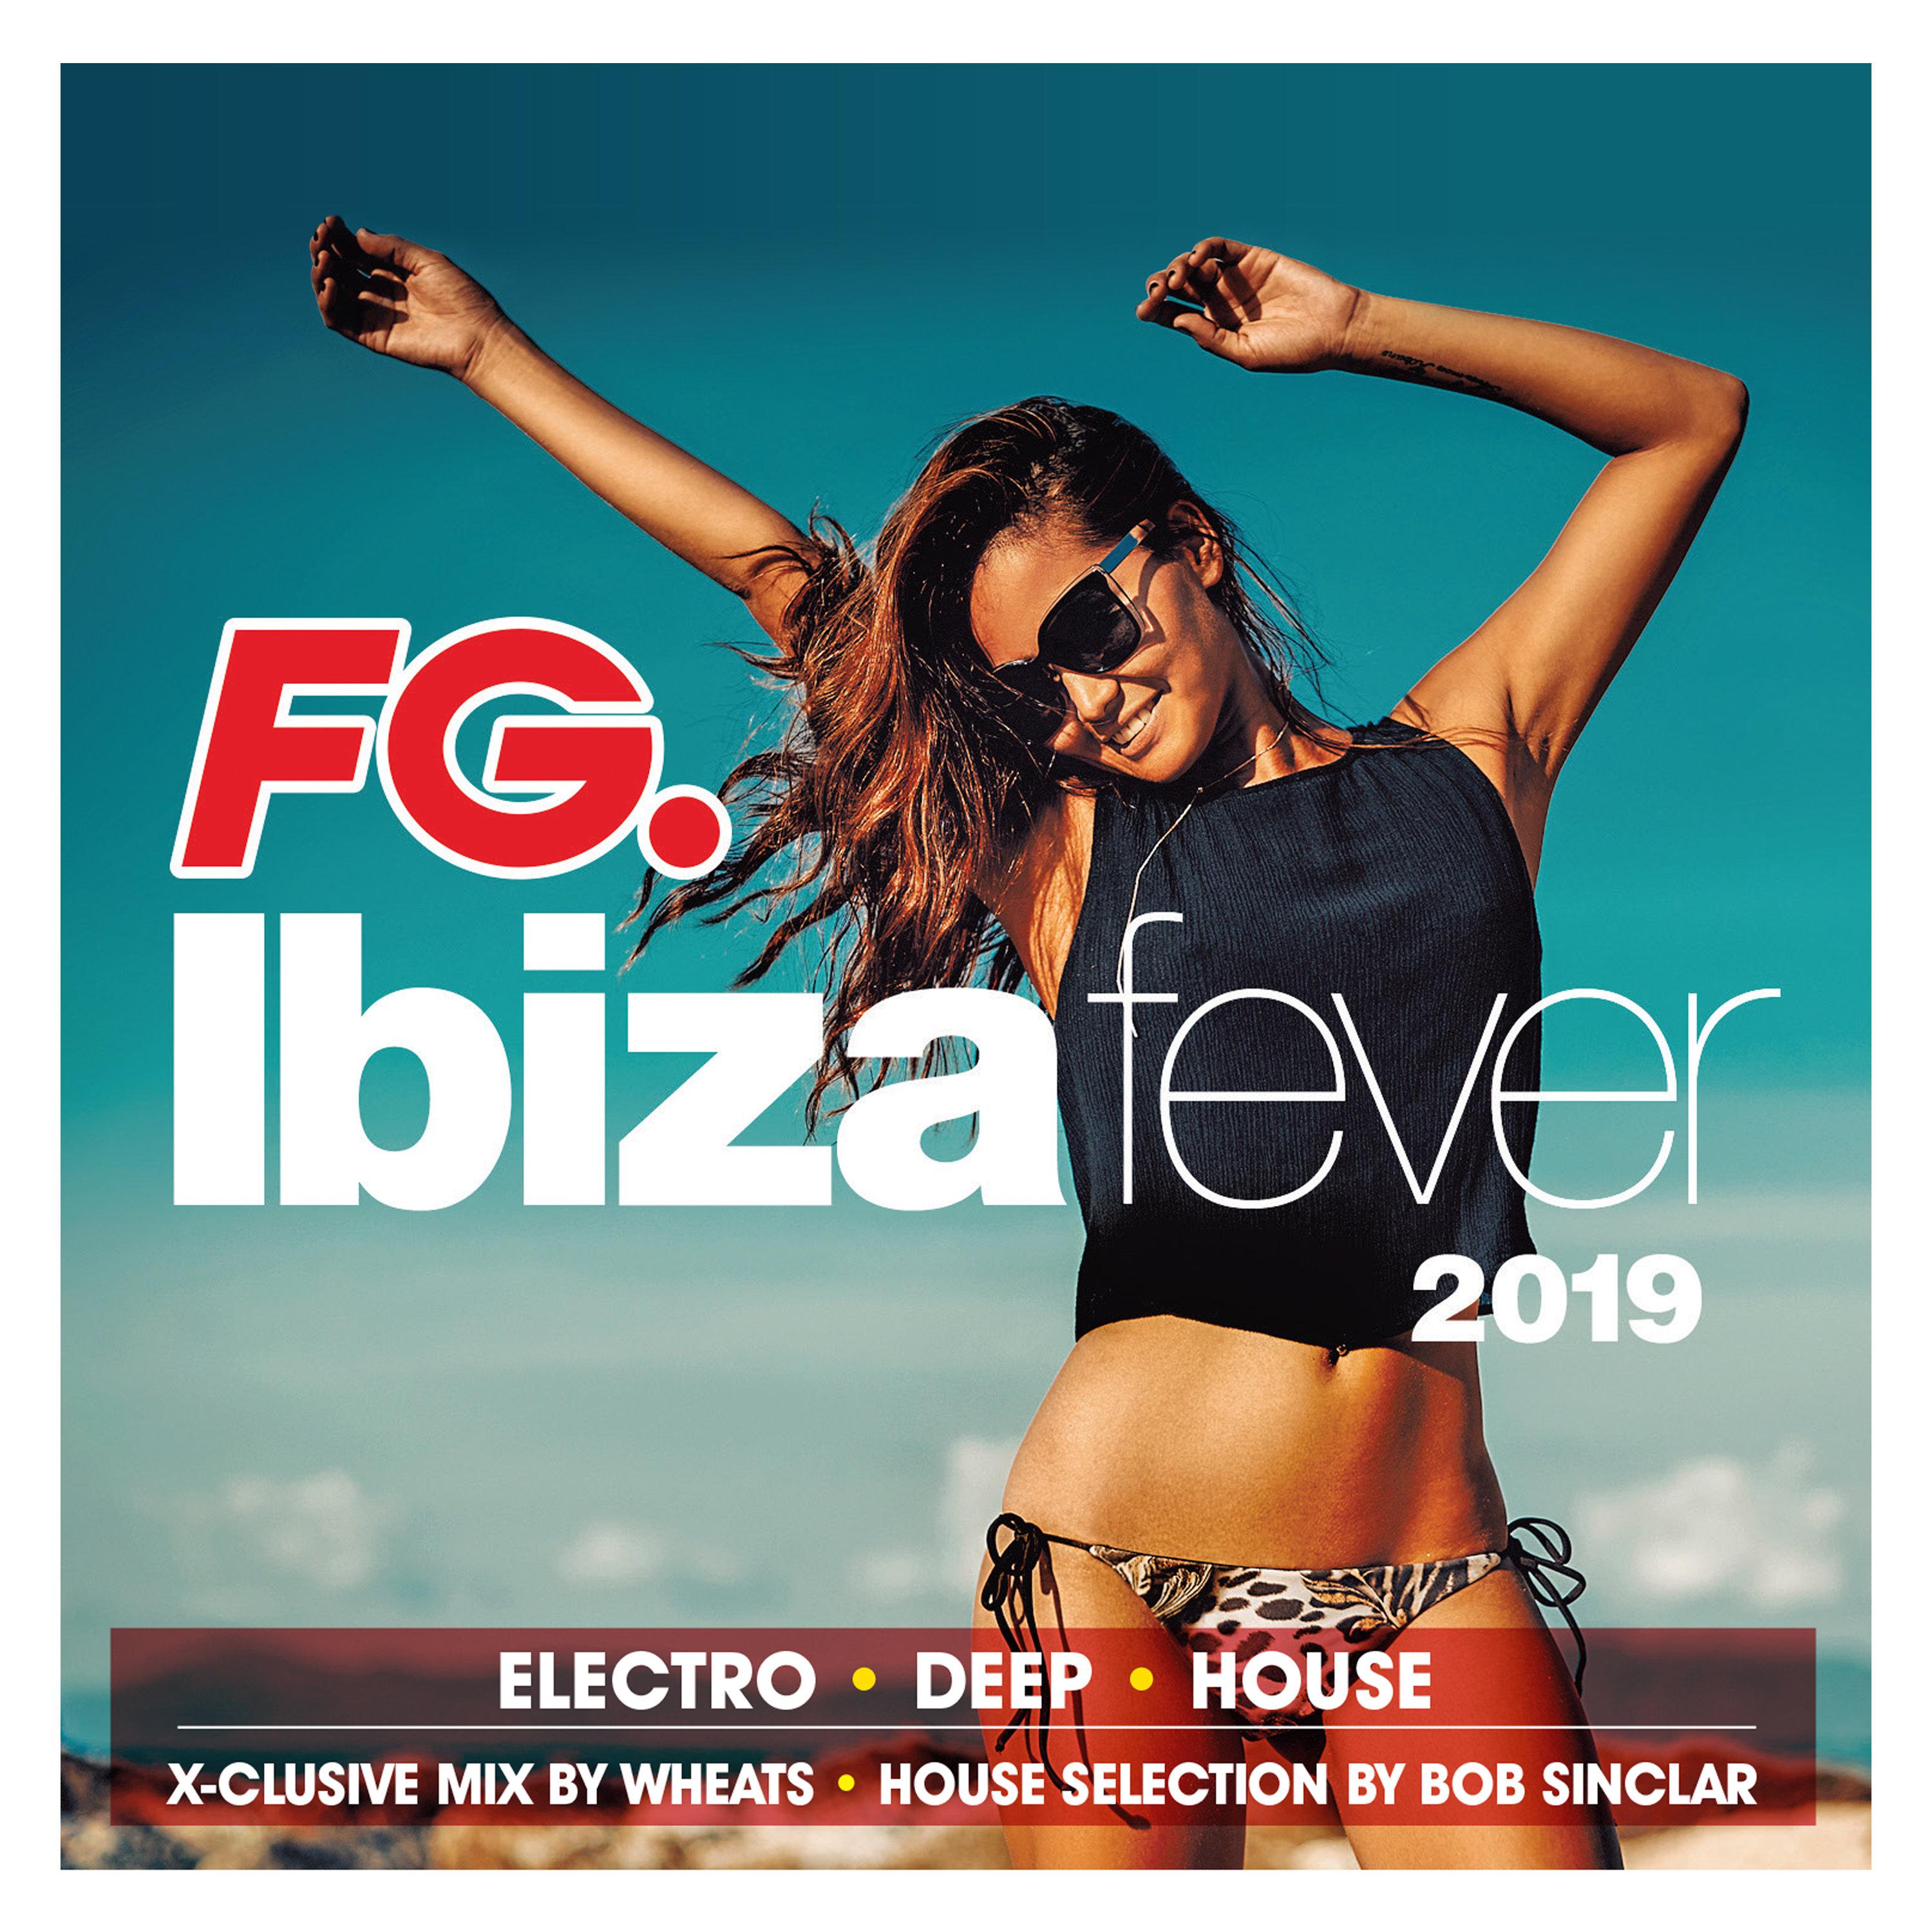 Ibiza Fever 2019 By FG